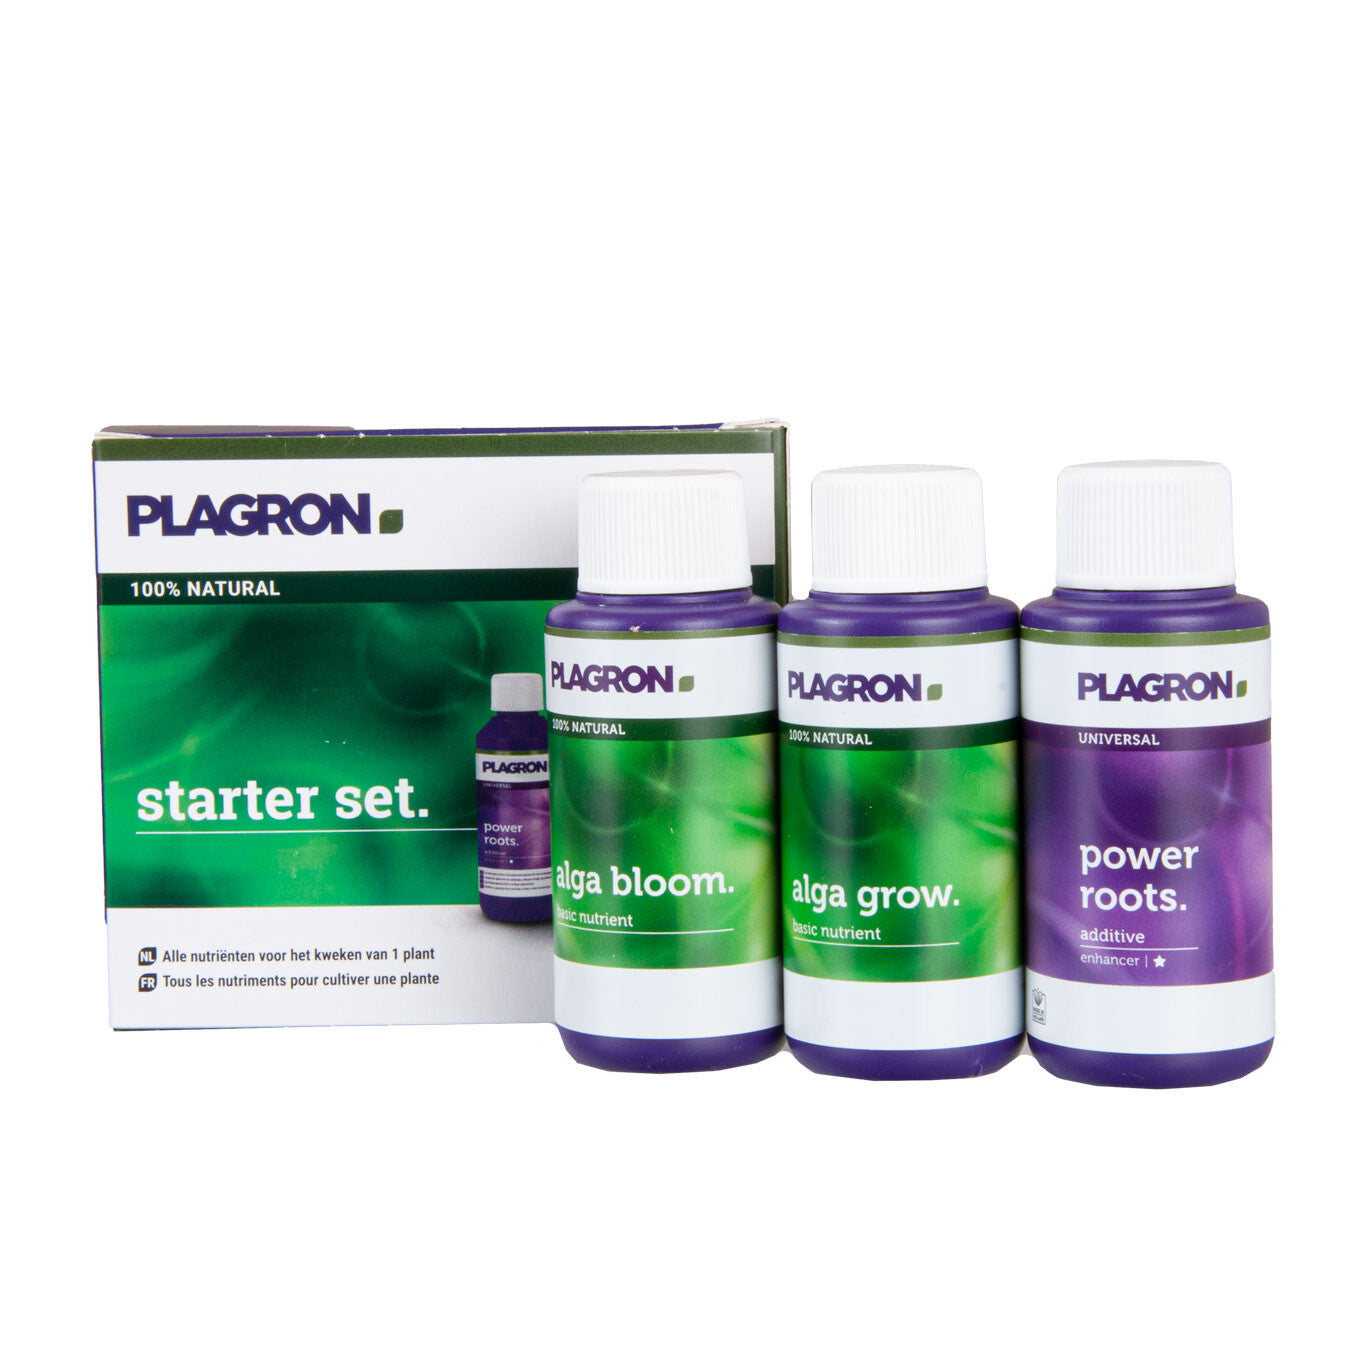 Plagron Starter Set 100% Natural